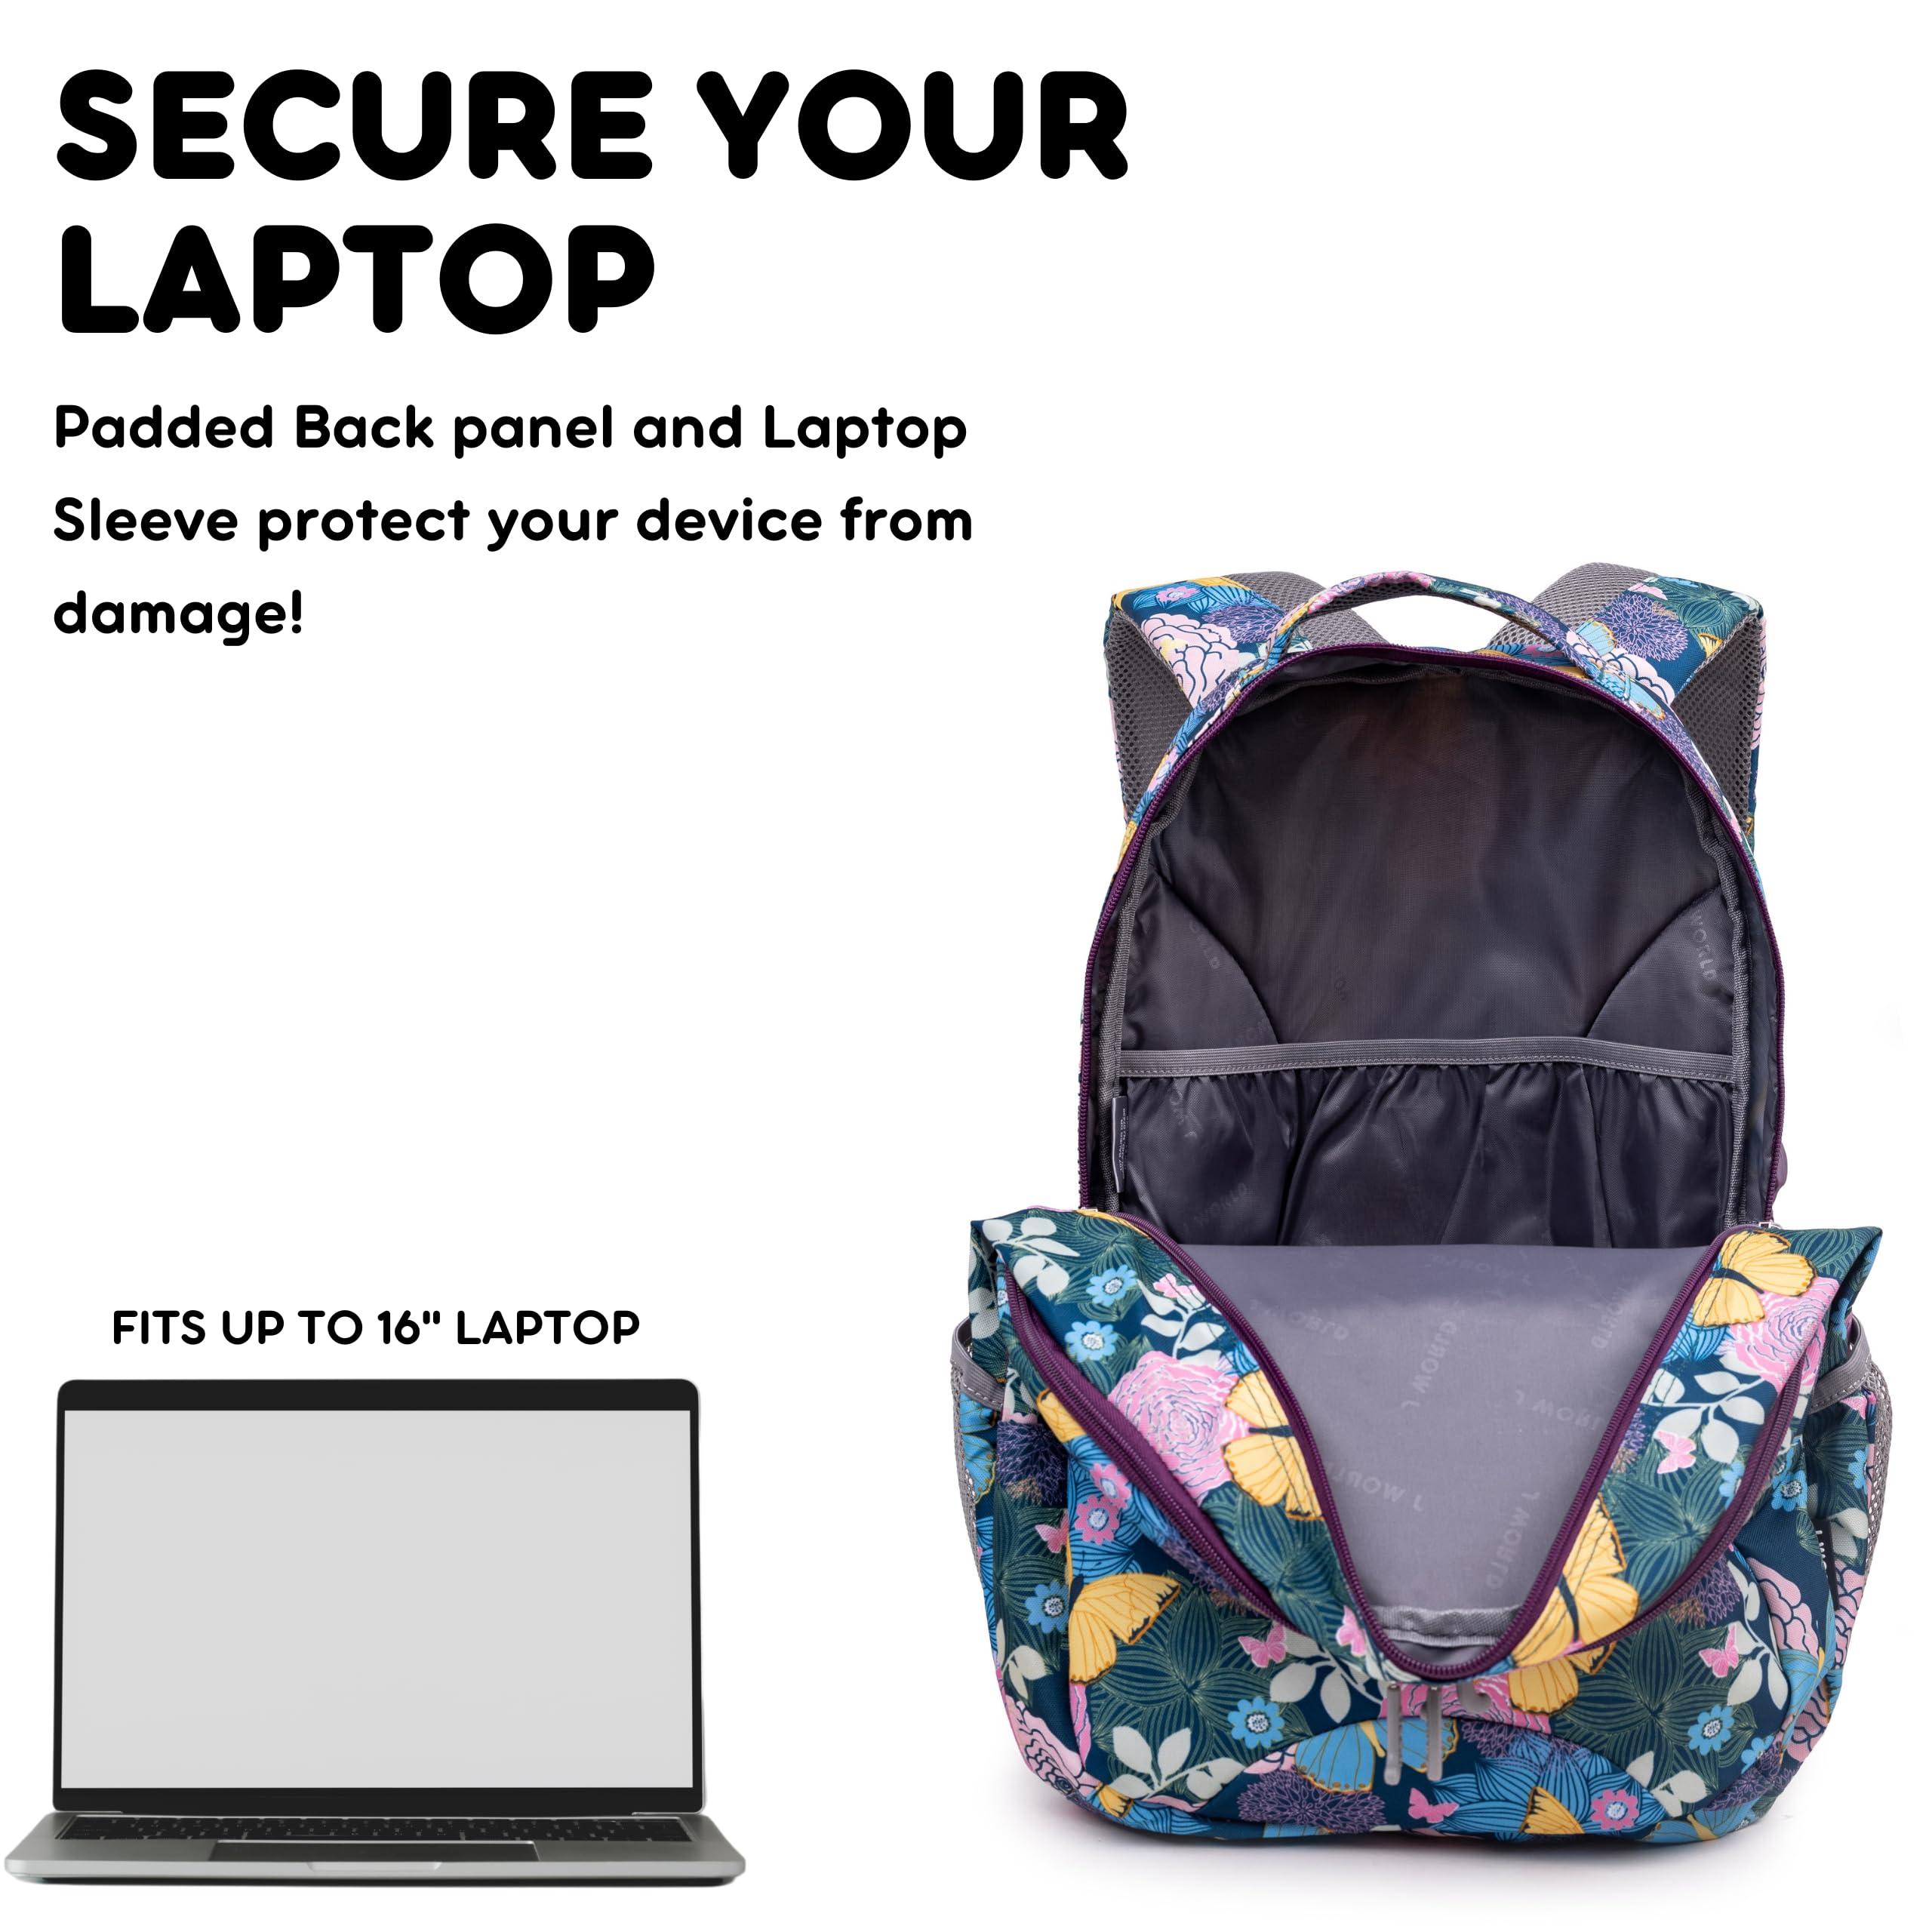 J World New York Cornelia Laptop Backpack